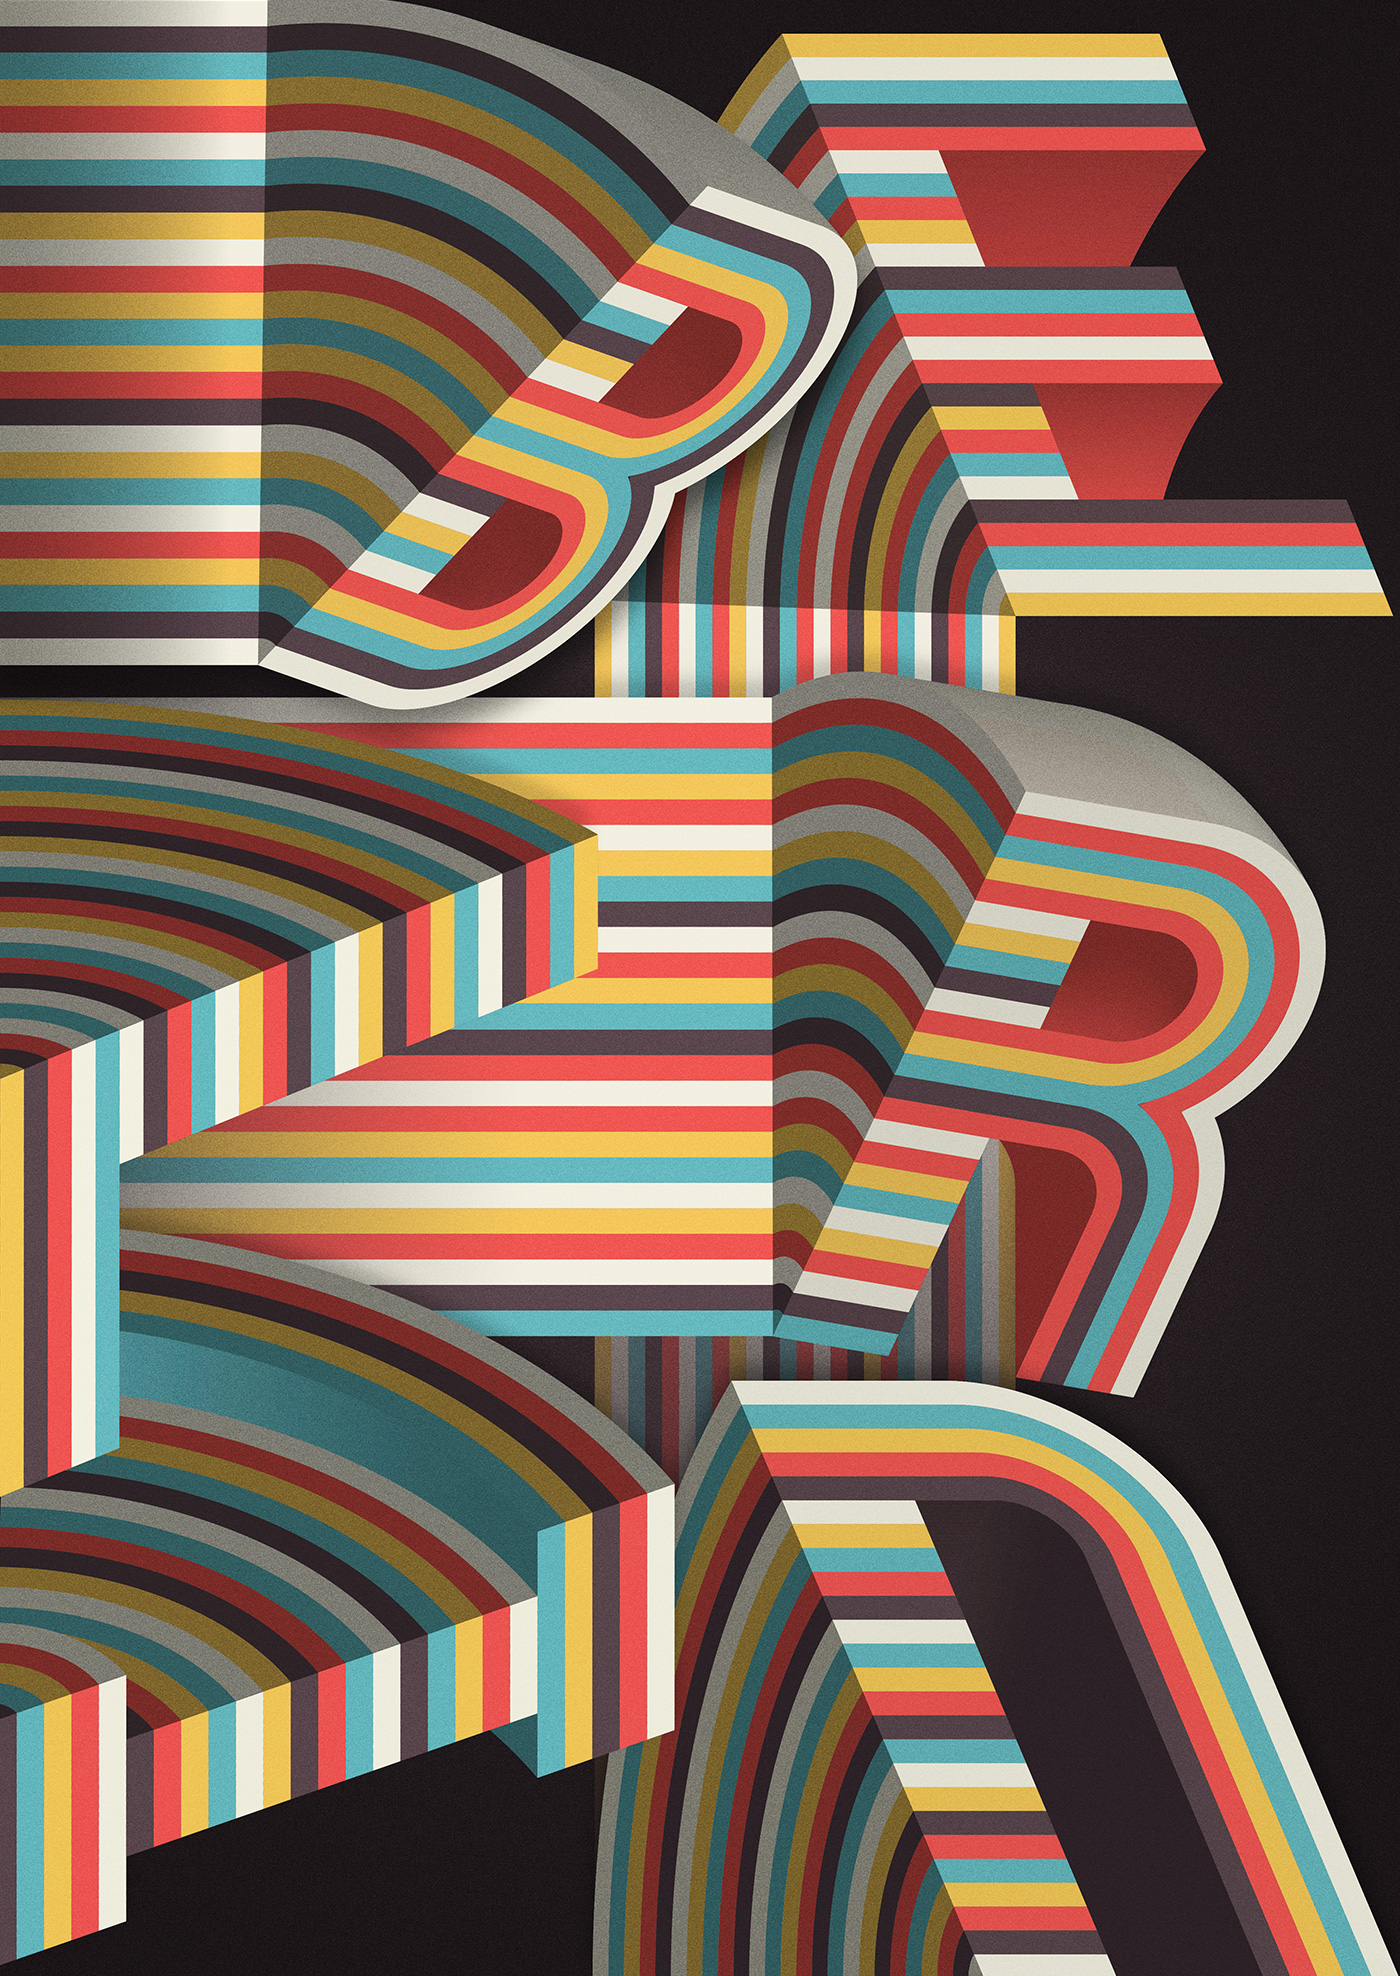 showusyourtype type revolve poster city berlin lettering 3D Type stripes